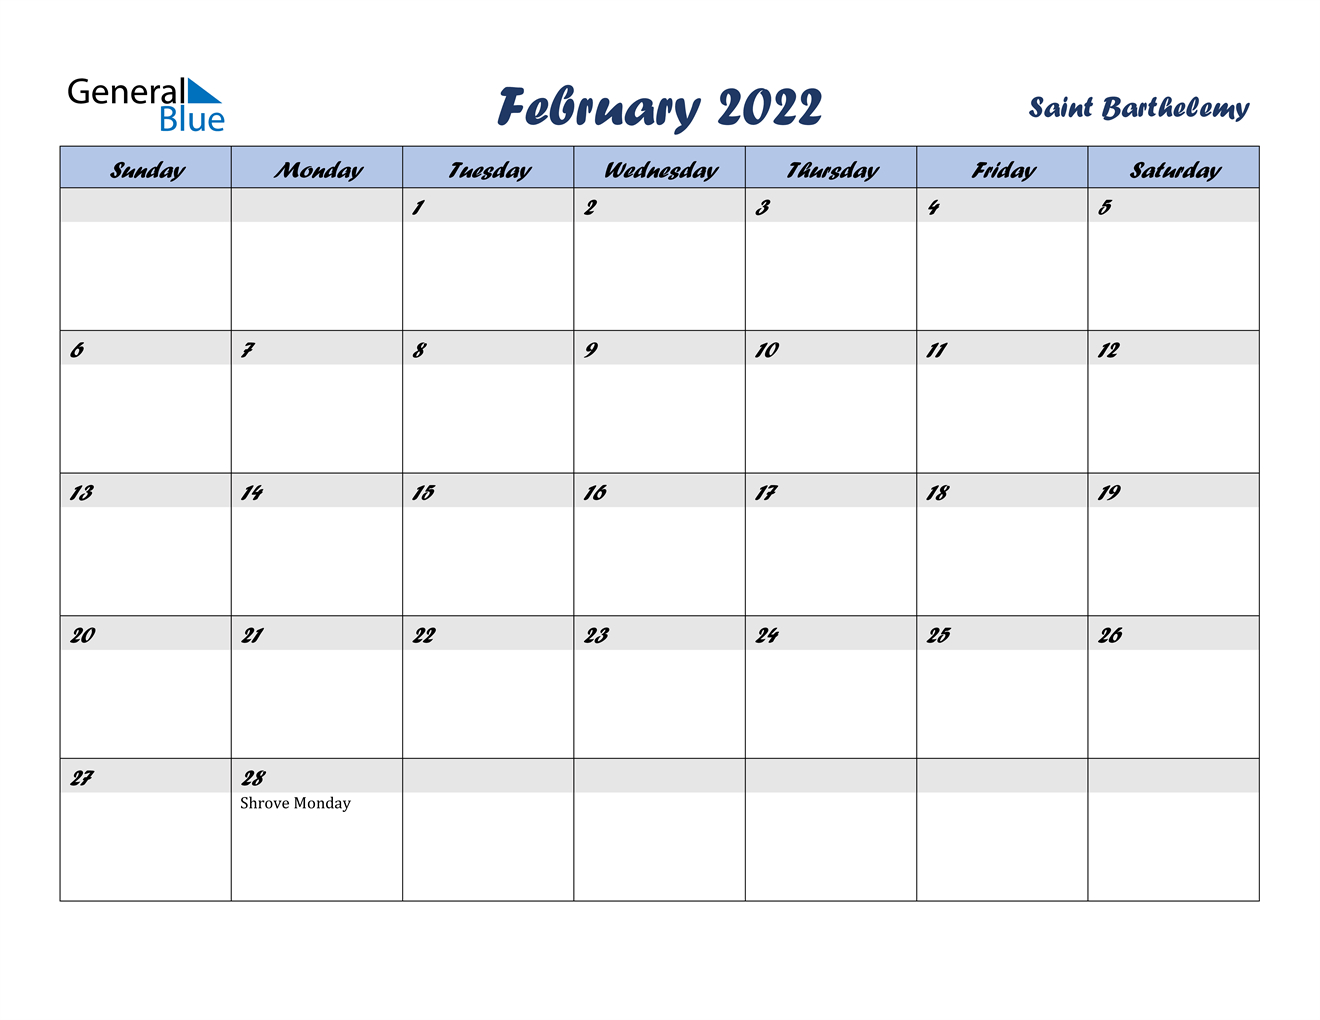 February 2022 Calendar - Saint Barthelemy